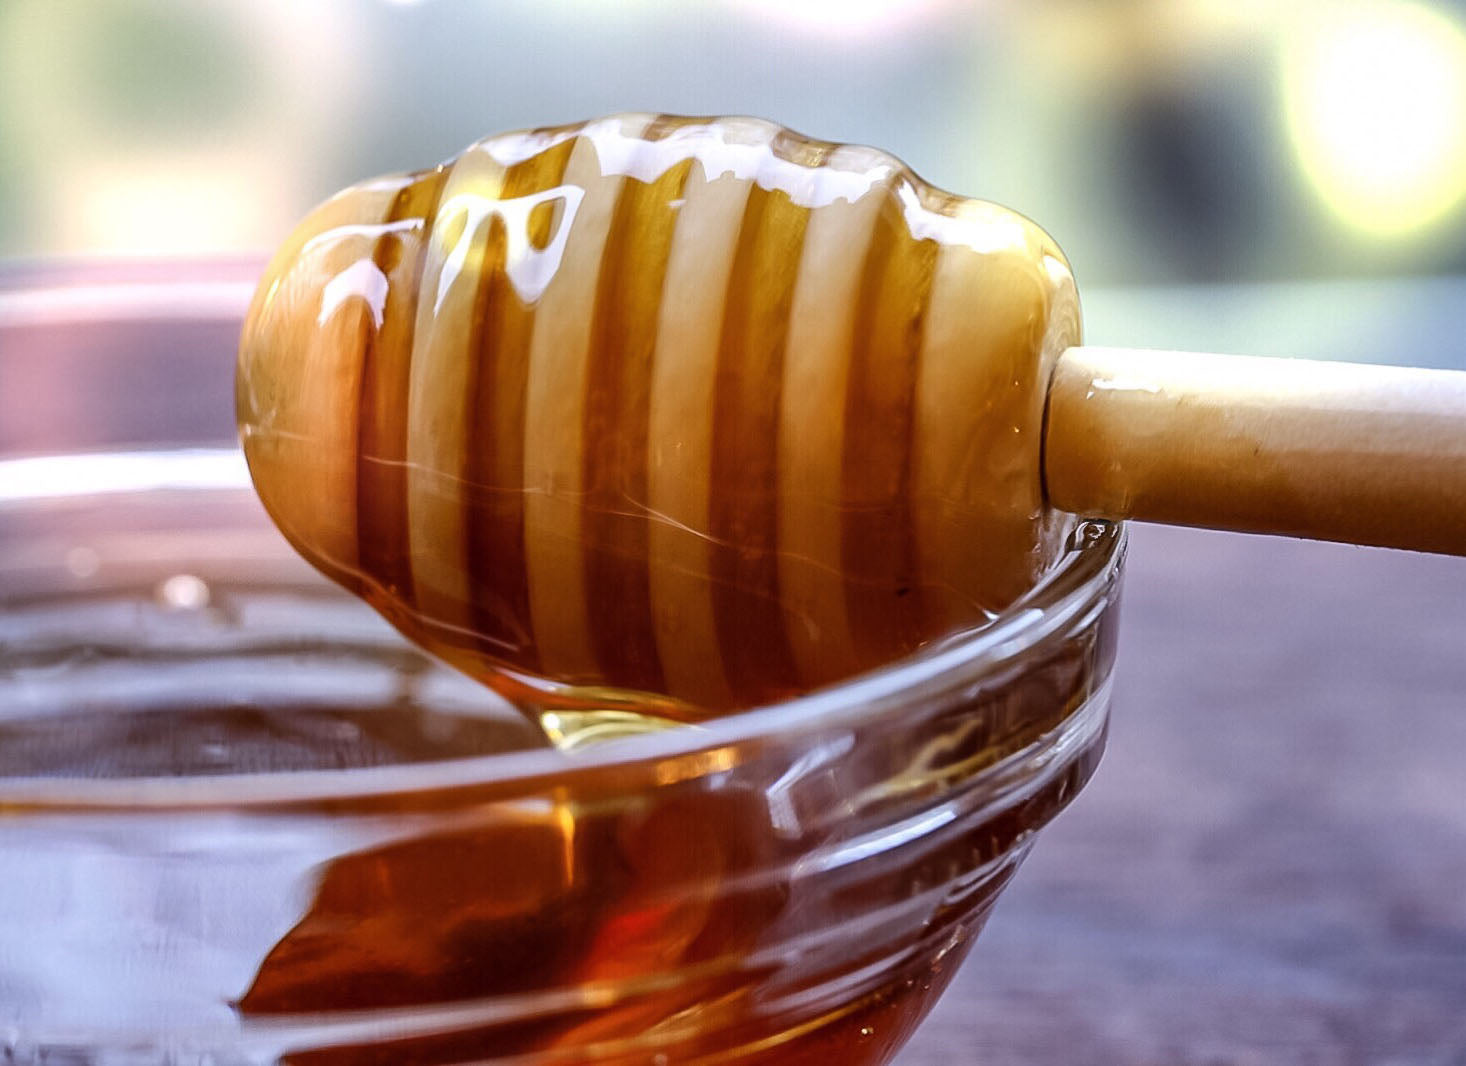 Honey as a paleo ingredient